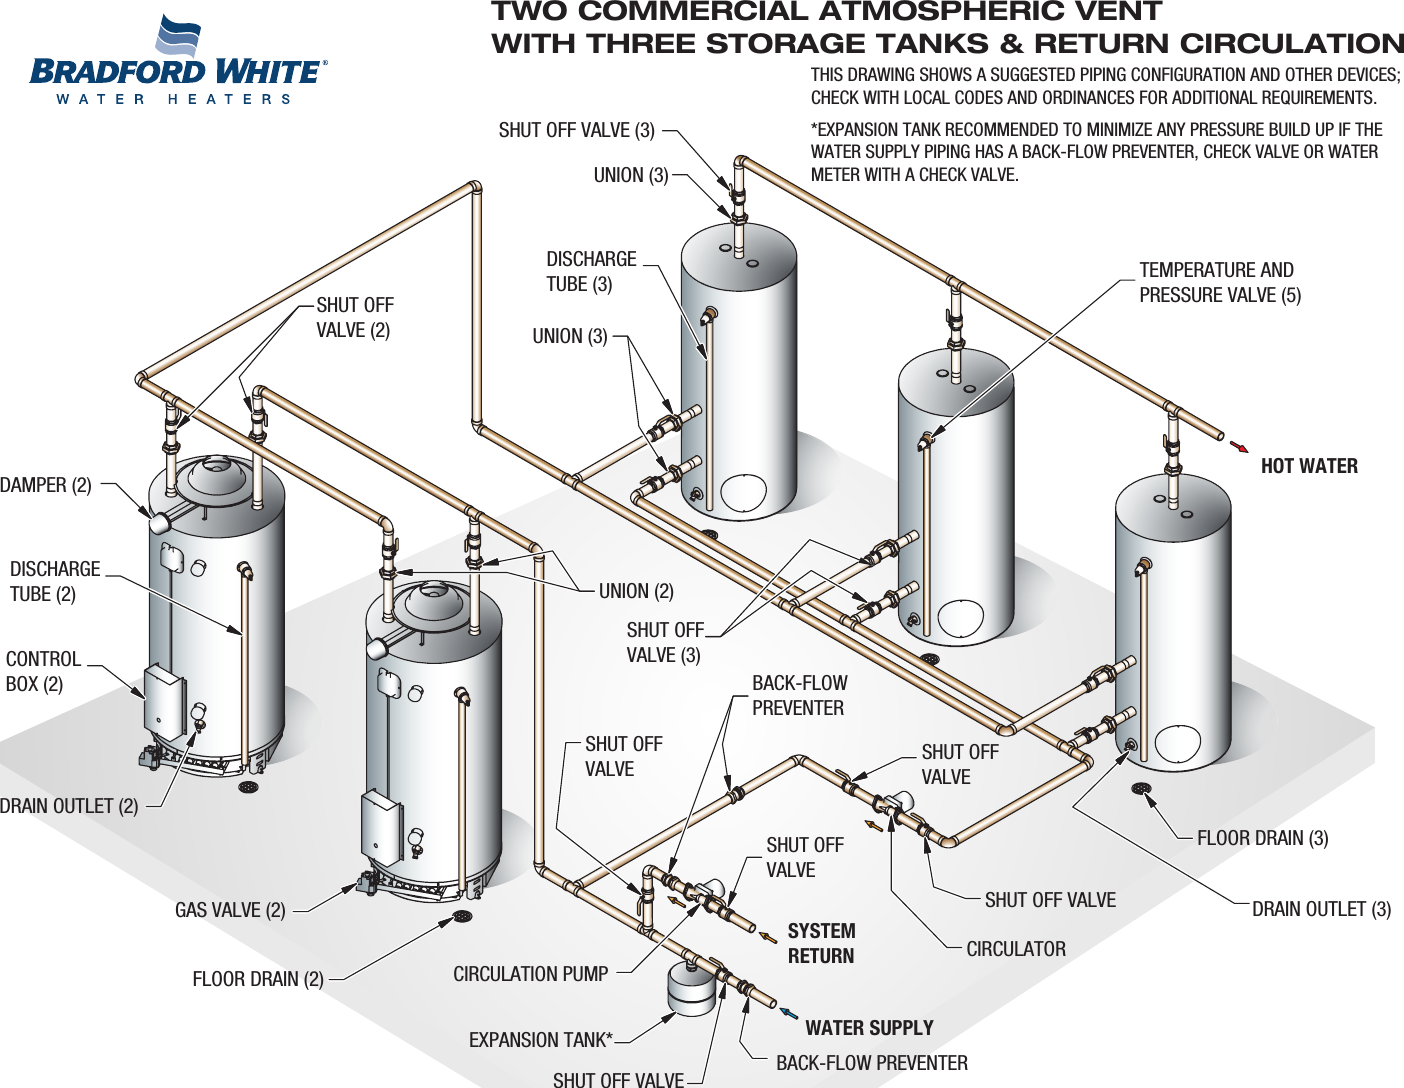 [DIAGRAM] Hot Water Storage Tank Piping Diagram - MYDIAGRAM.ONLINE